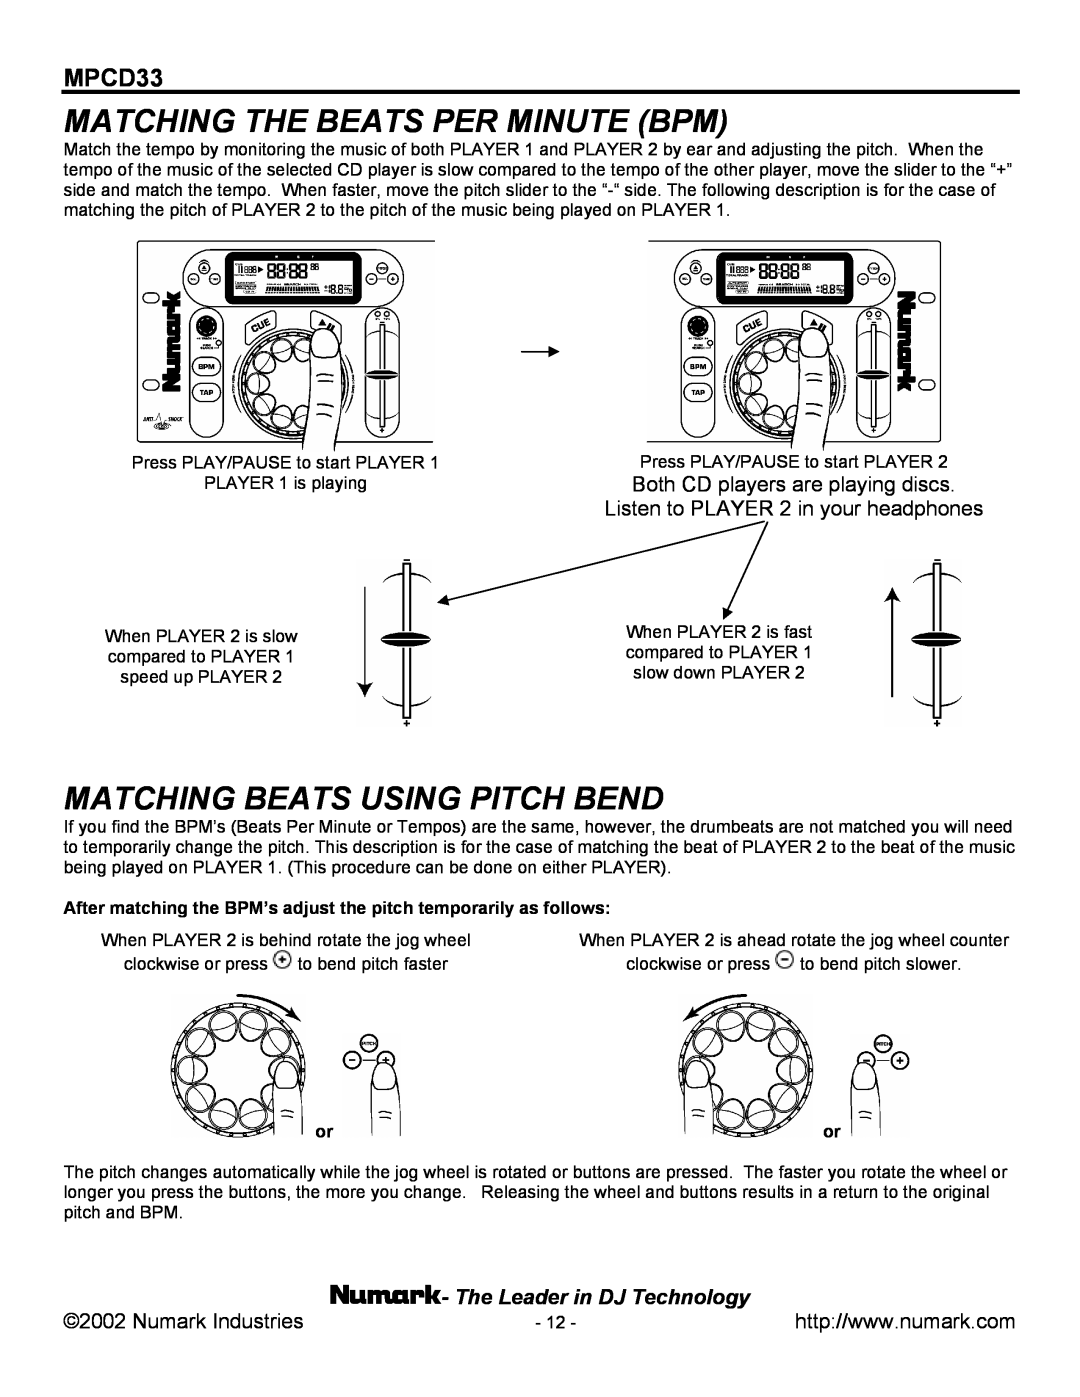 Numark Industries MPCD33 manual Matching The Beats Per Minute Bpm, Matching Beats Using Pitch Bend, Numark Industries 